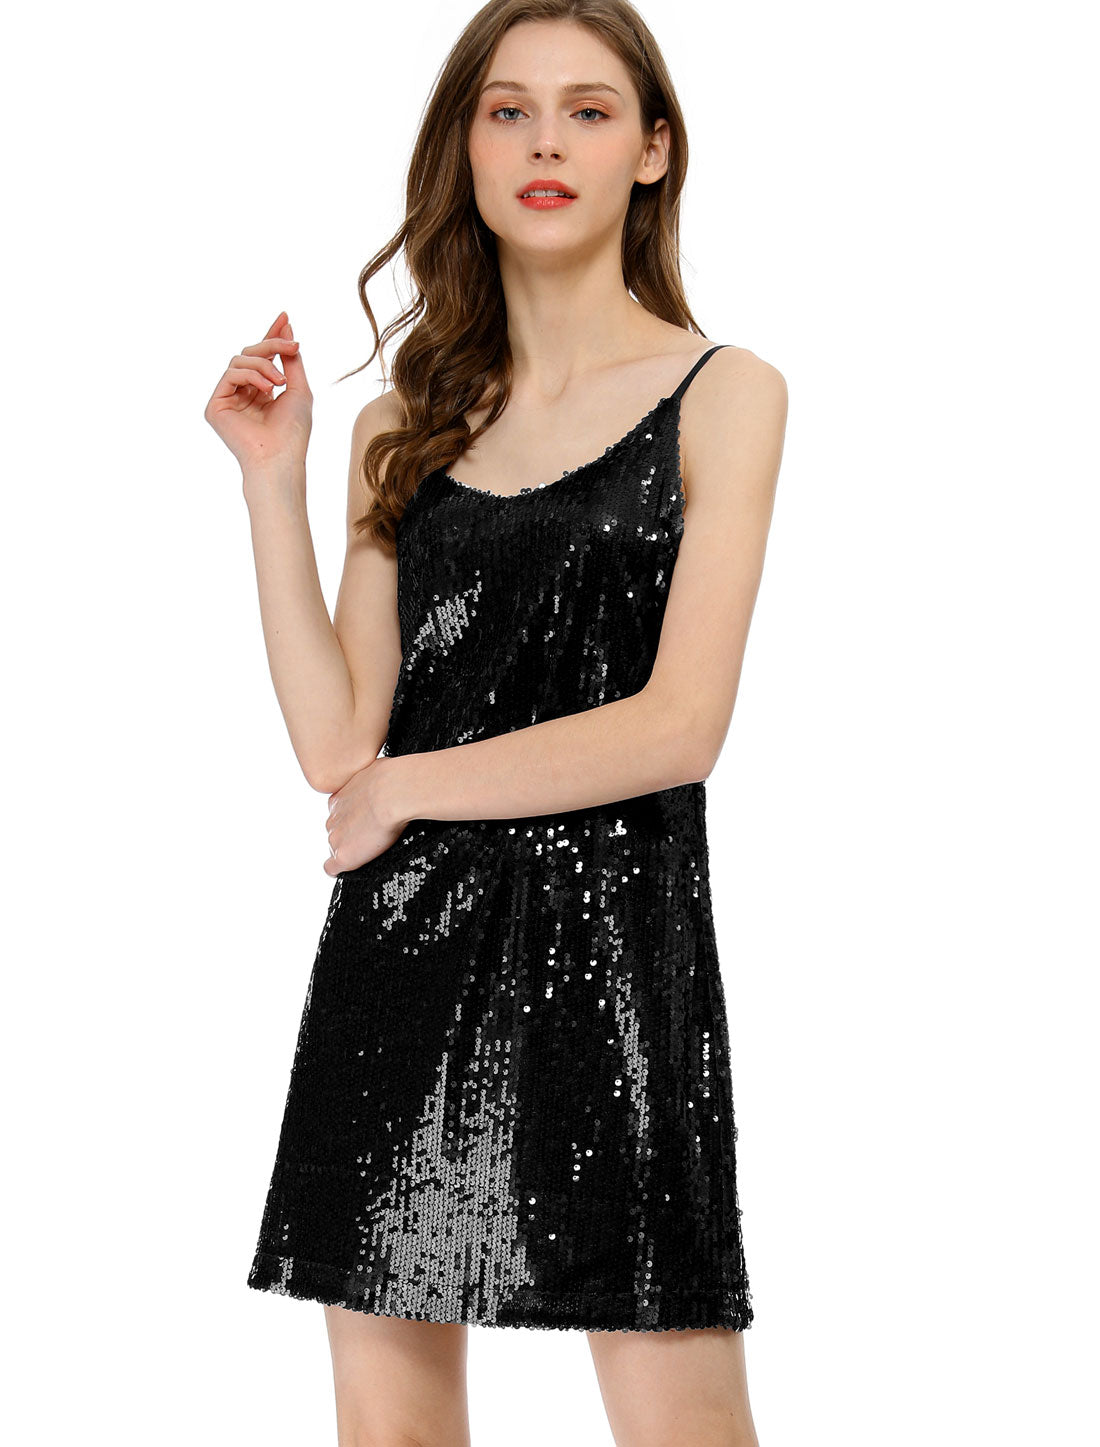 Allegra K Glitter Sequin Dress V Neck Spaghetti Strap Mini Party Dress Clubwear Black